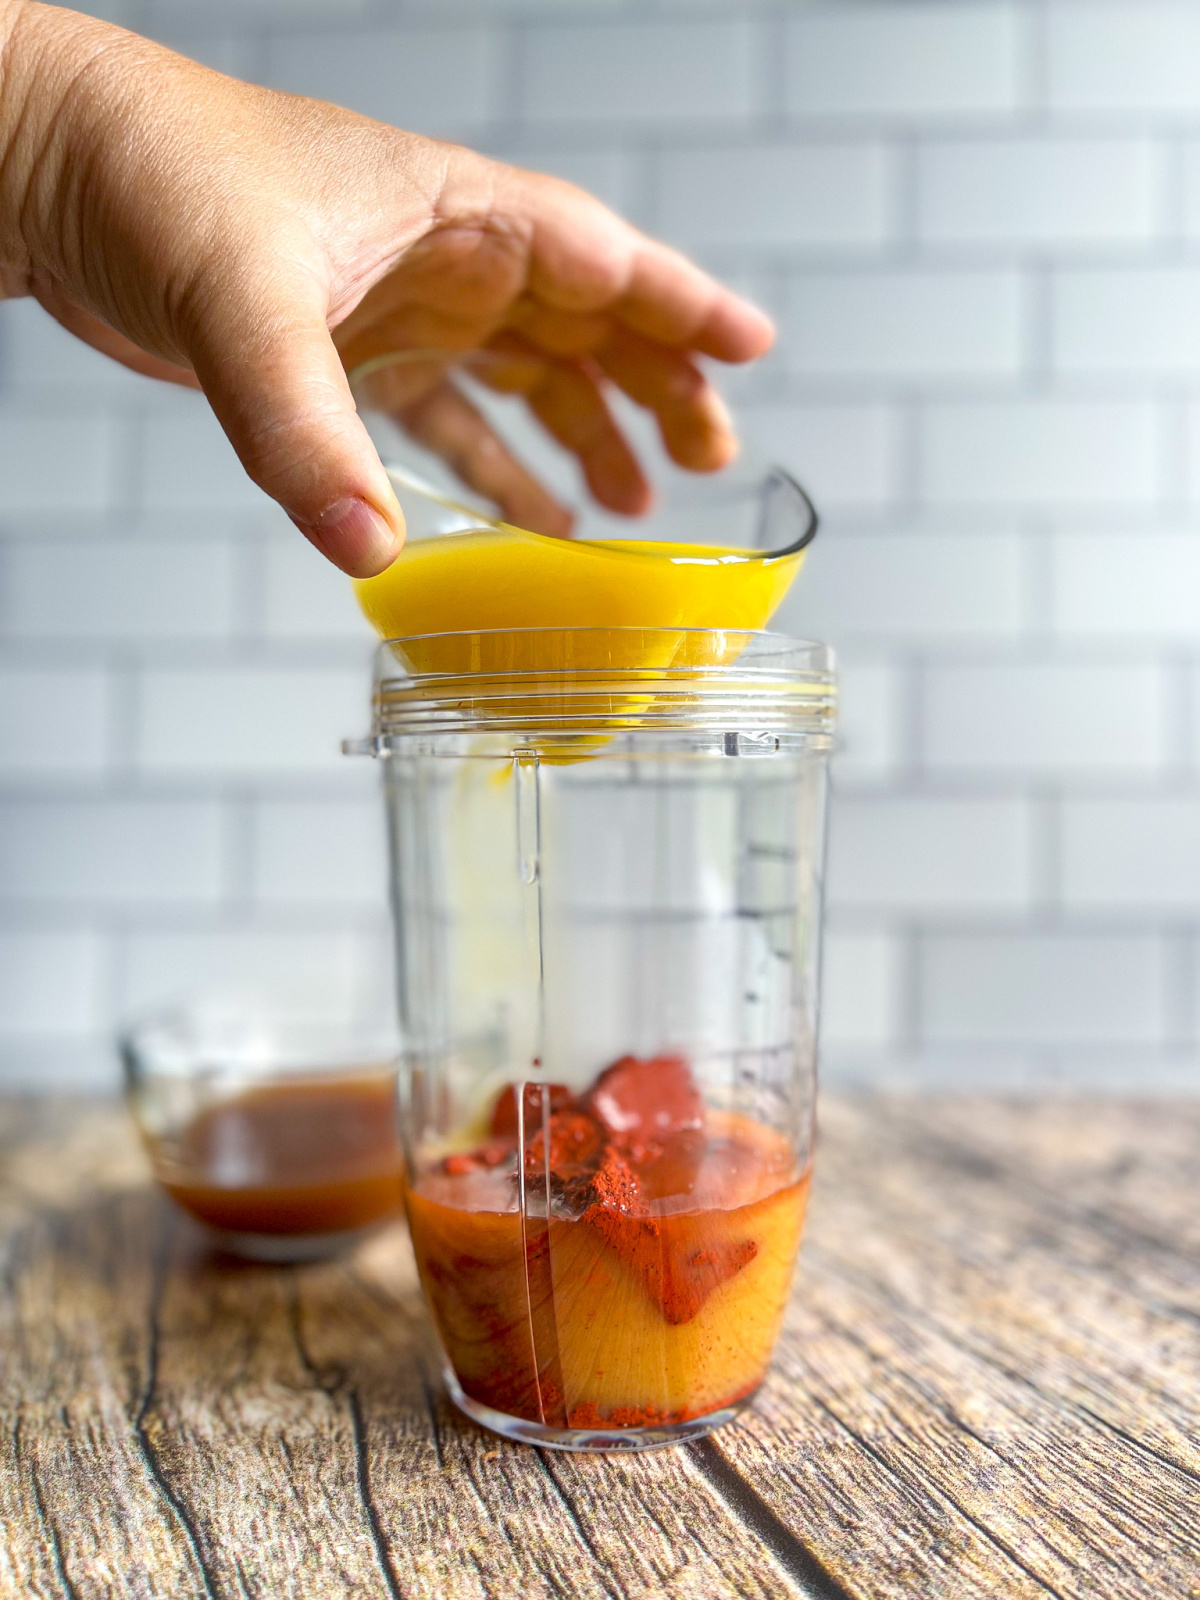 Pouring orange juice into the blender